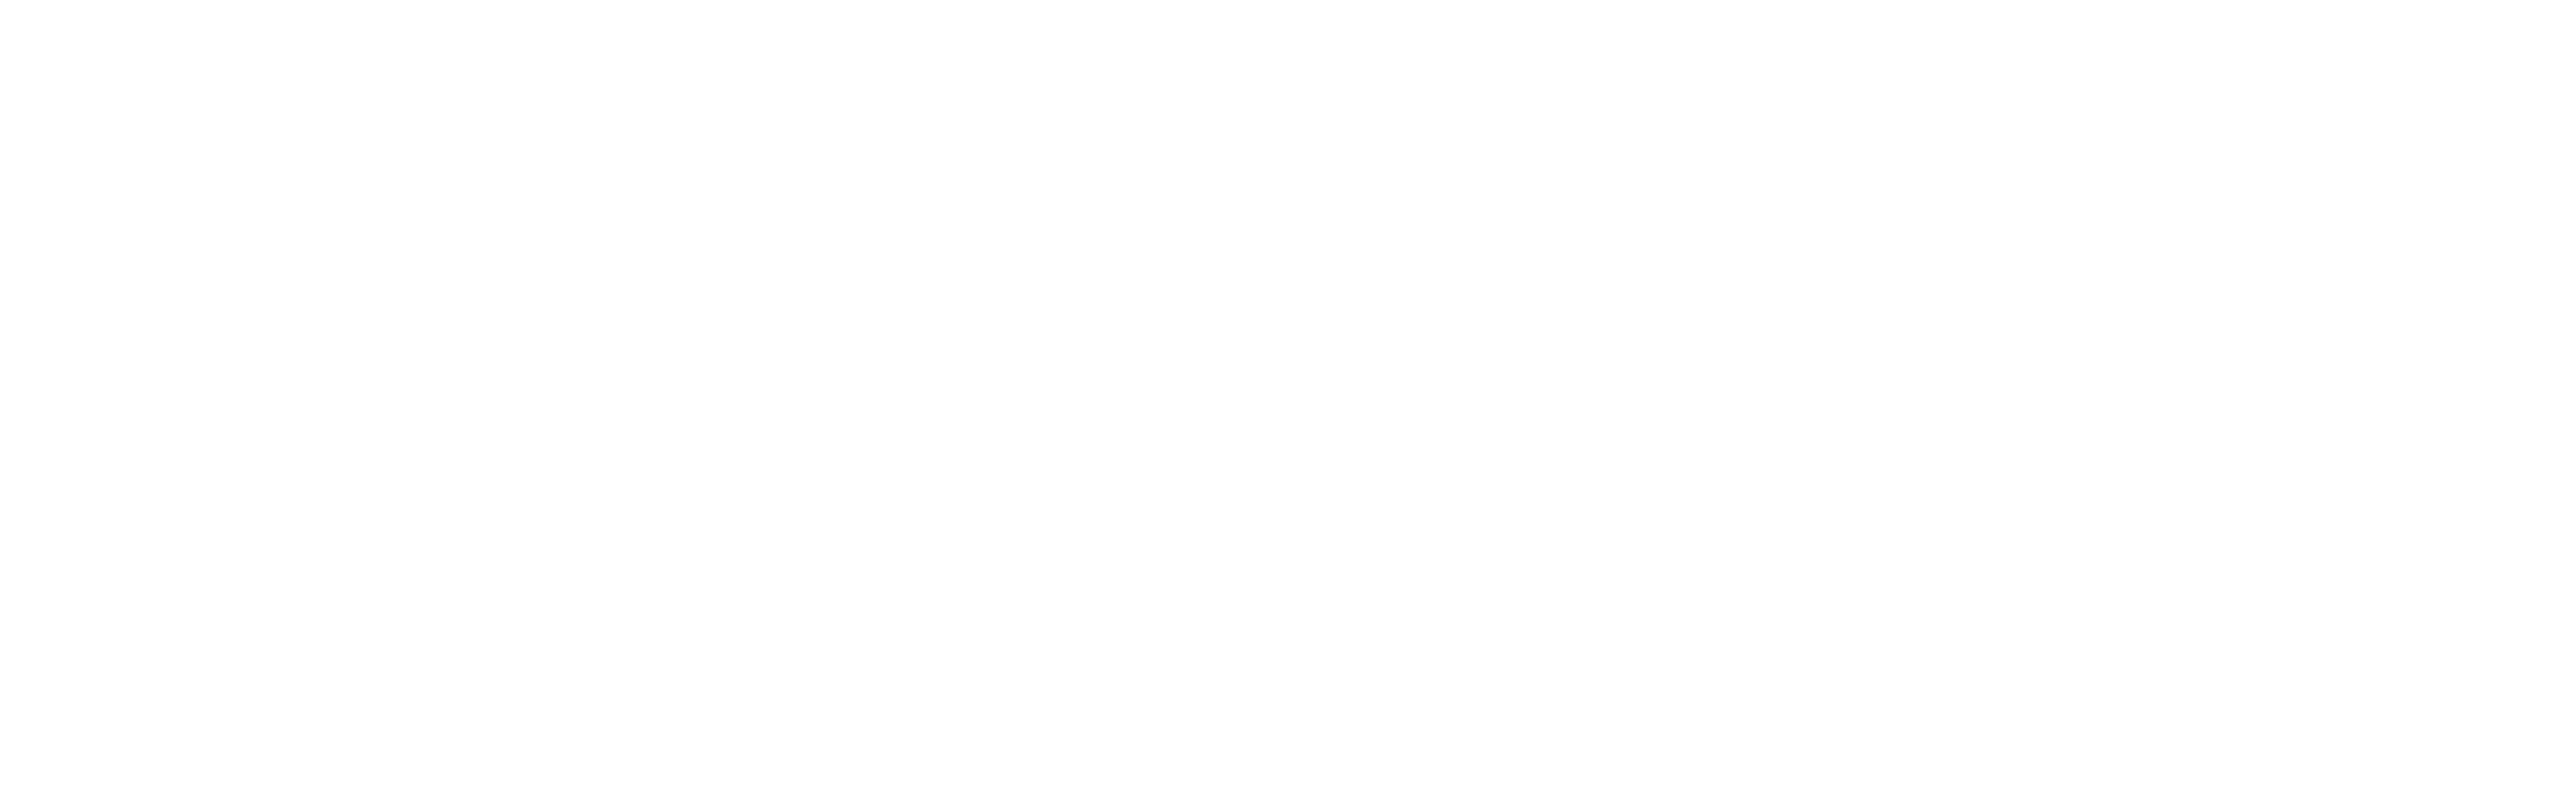 SPC's 75th anniversary logo horizontal (white)